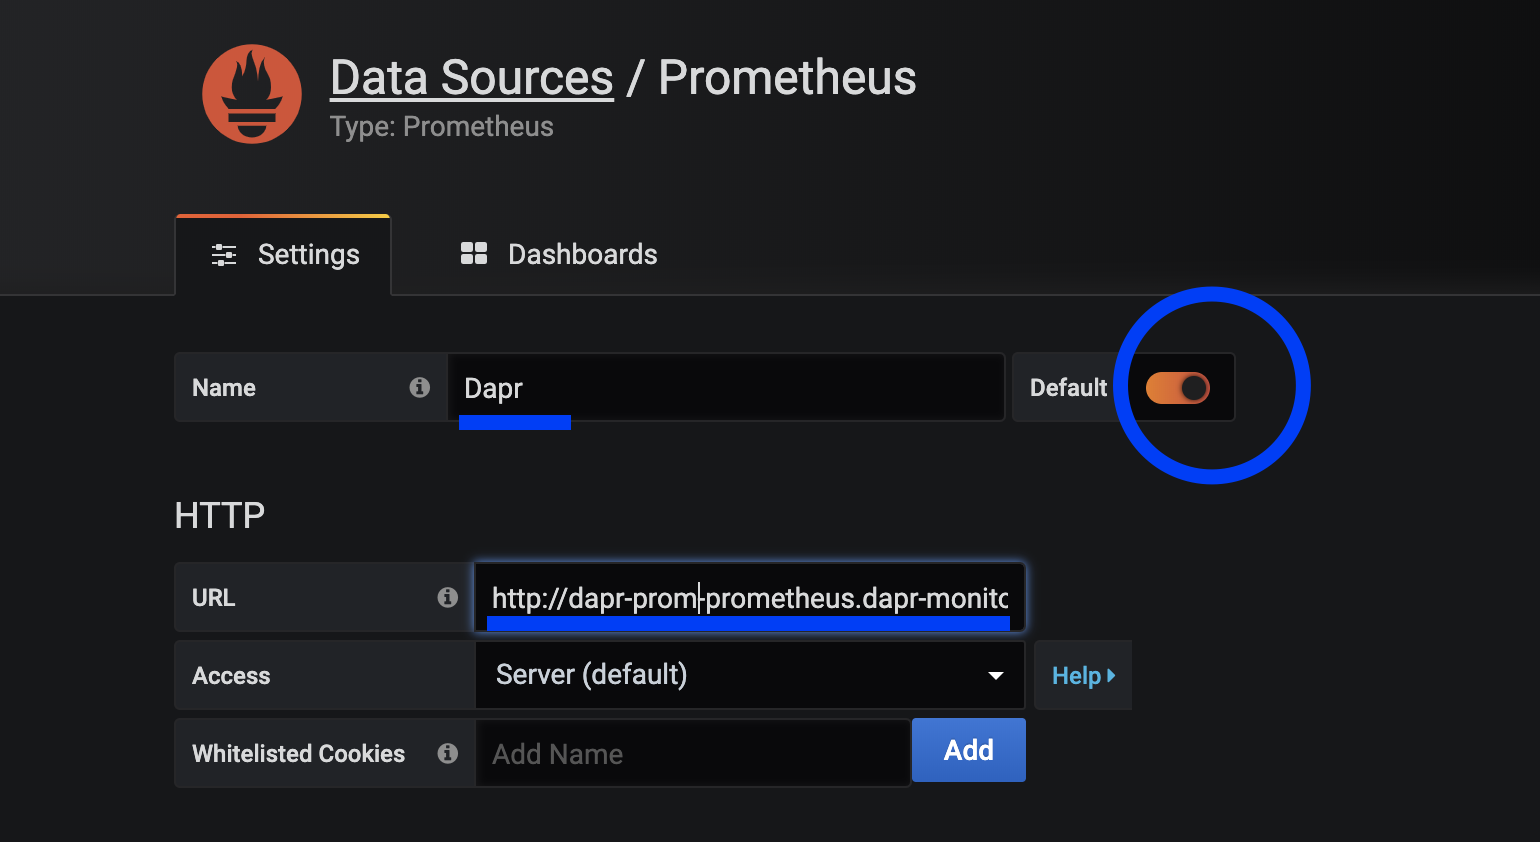 Screenshot of the Prometheus Data Source configuration